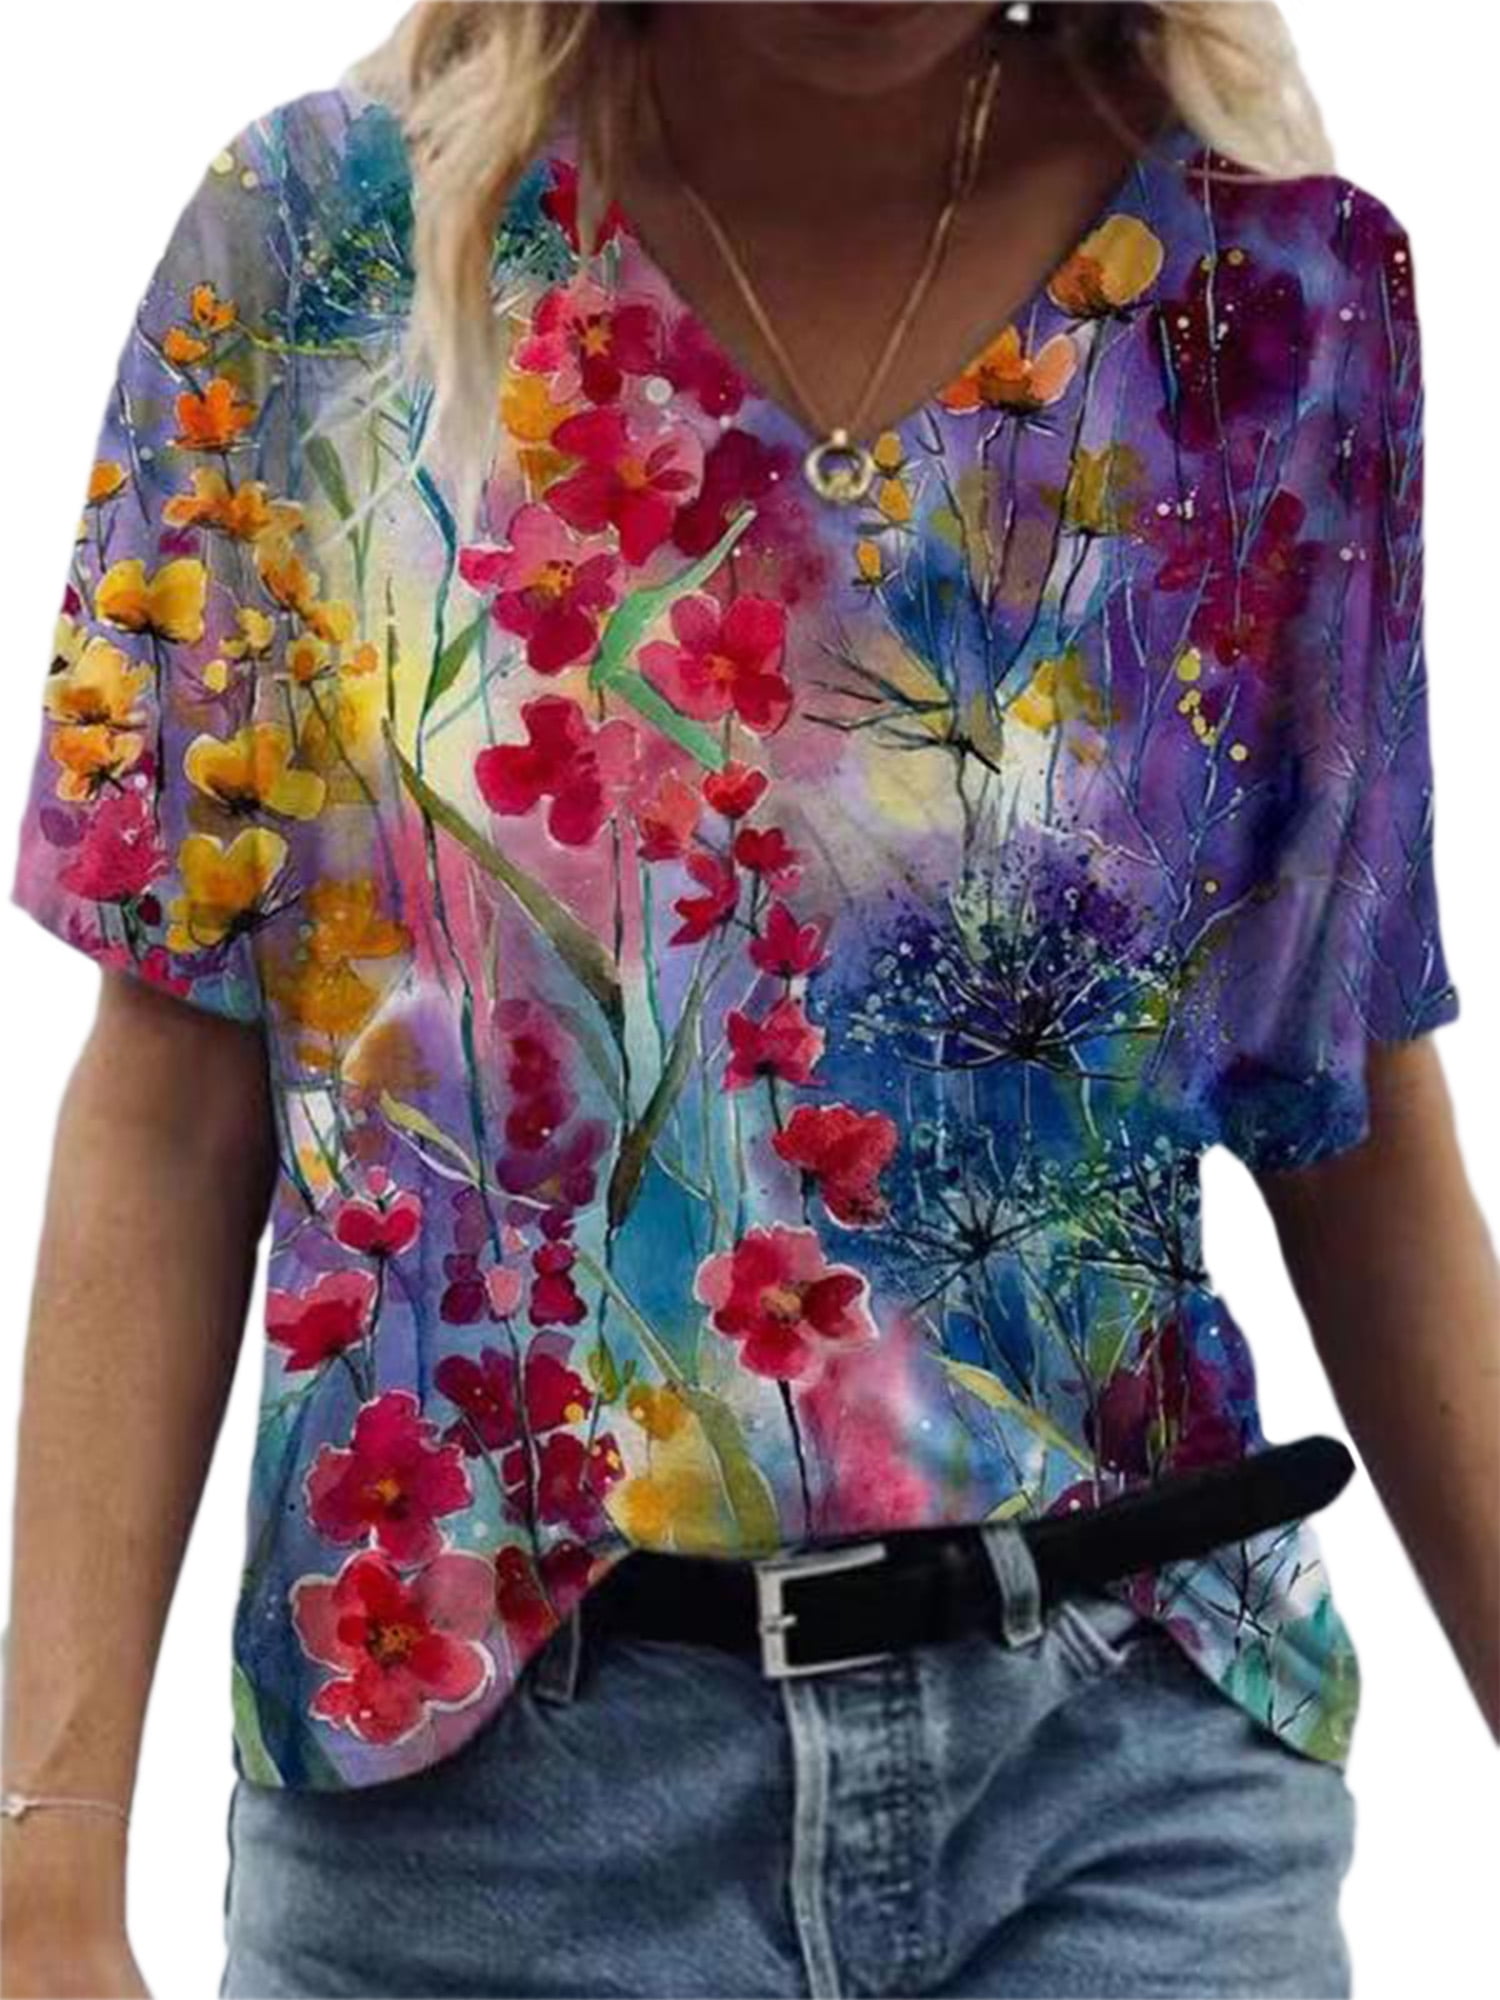 Women Summer Tees Casual Print Floral V-Neck Short Sleeve T-Shirt Tops Blouse